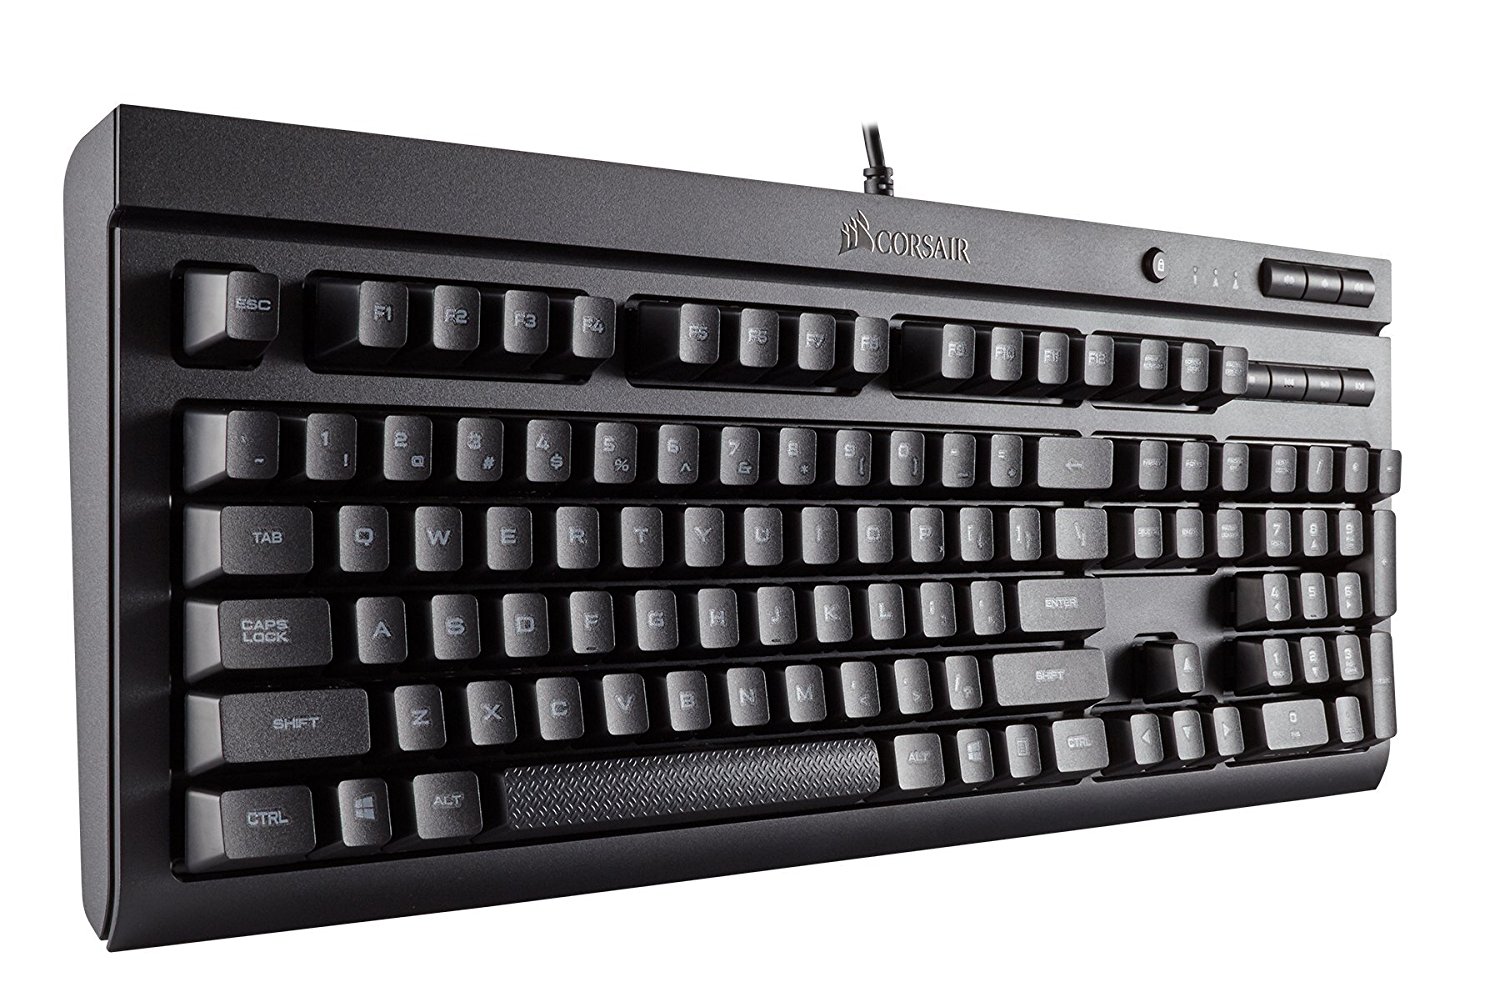 Corsair mechanical keyboard for designers